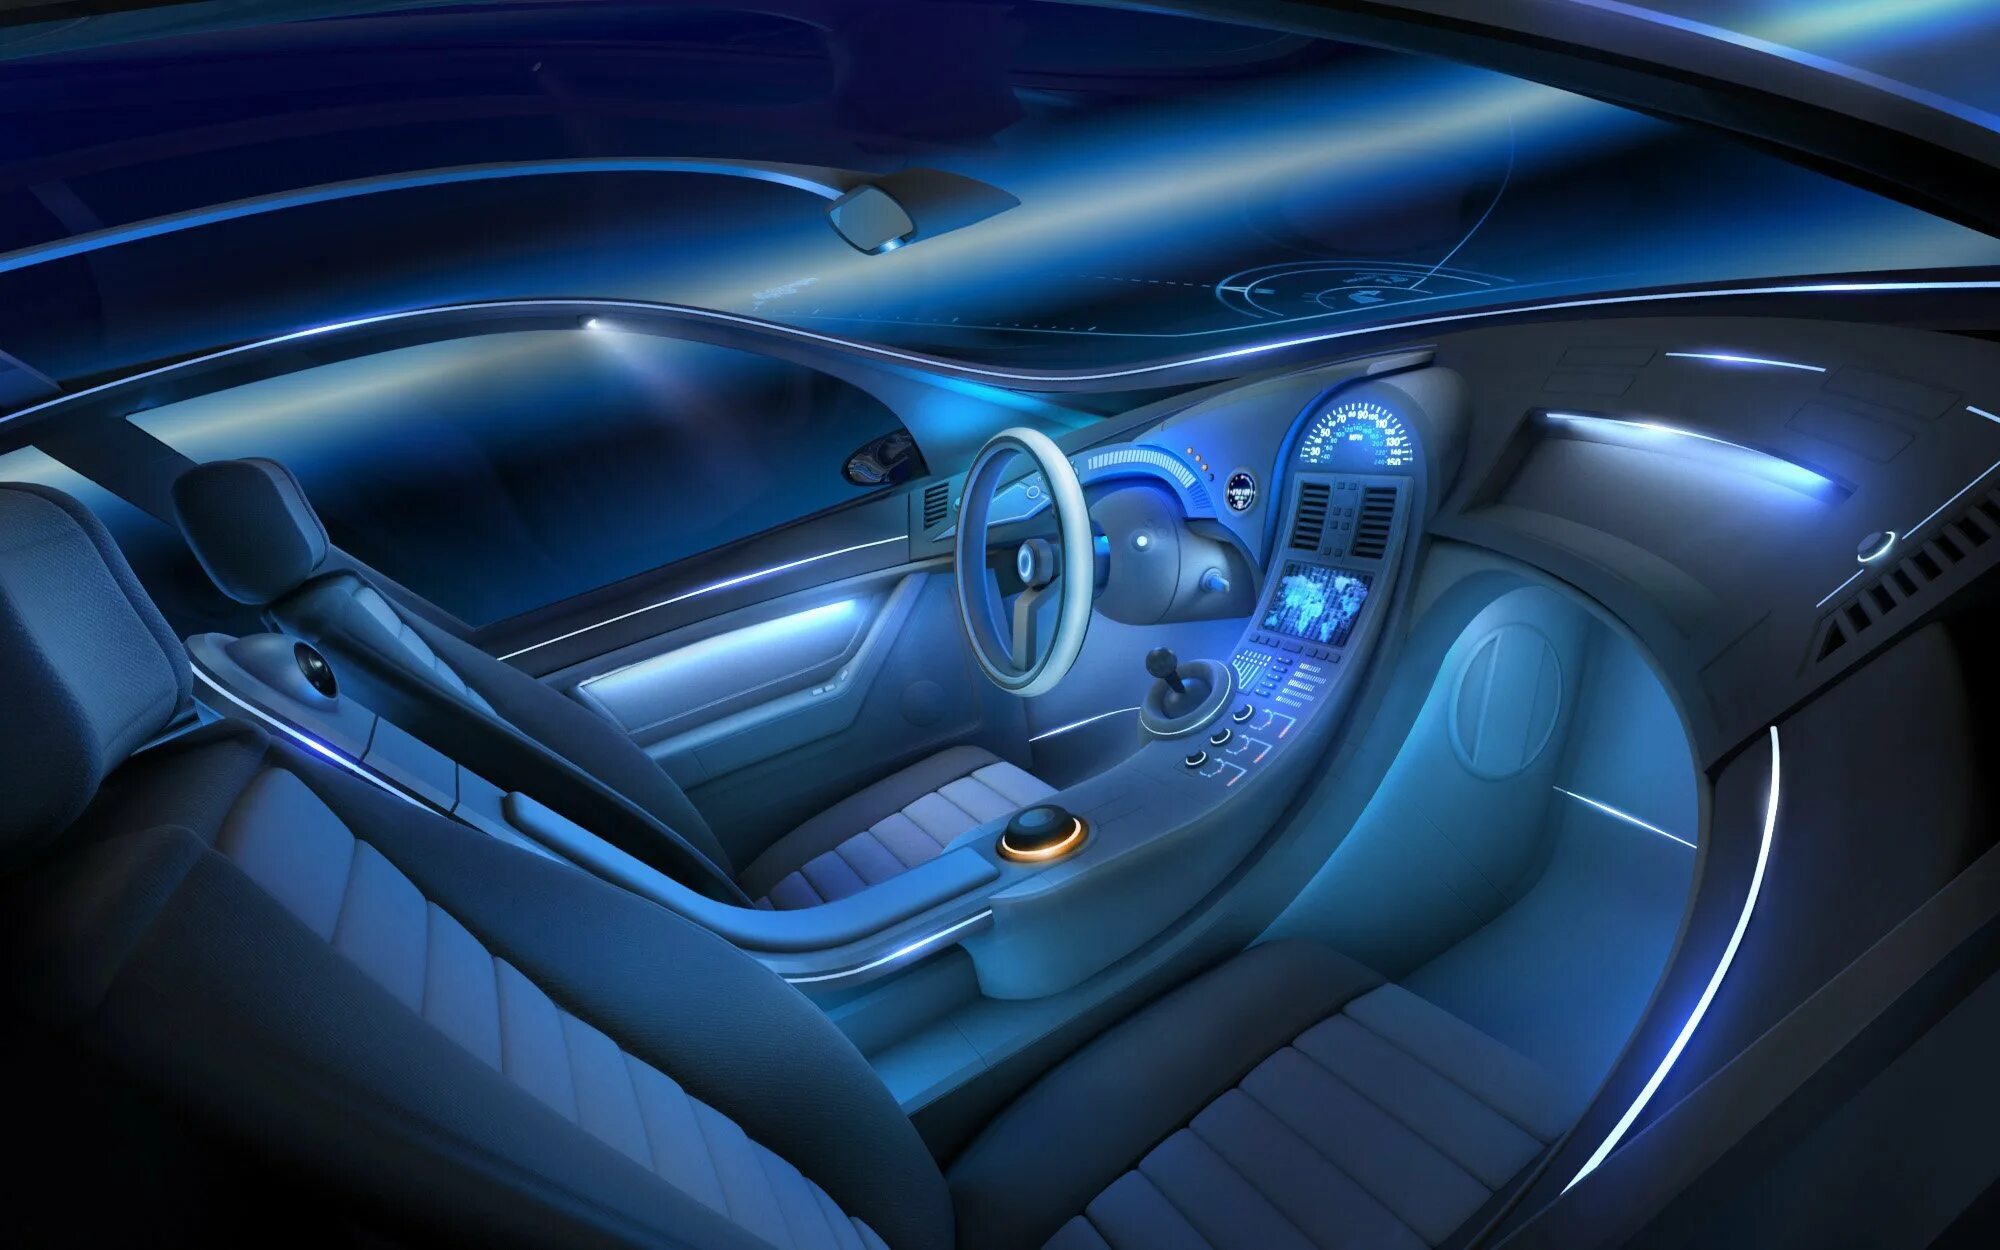 Mercedes Benz w222 салон подсветка. Подсветка салона автомобиля. Красивая подсветка салона автомобиля. Подсветка внутри машины.